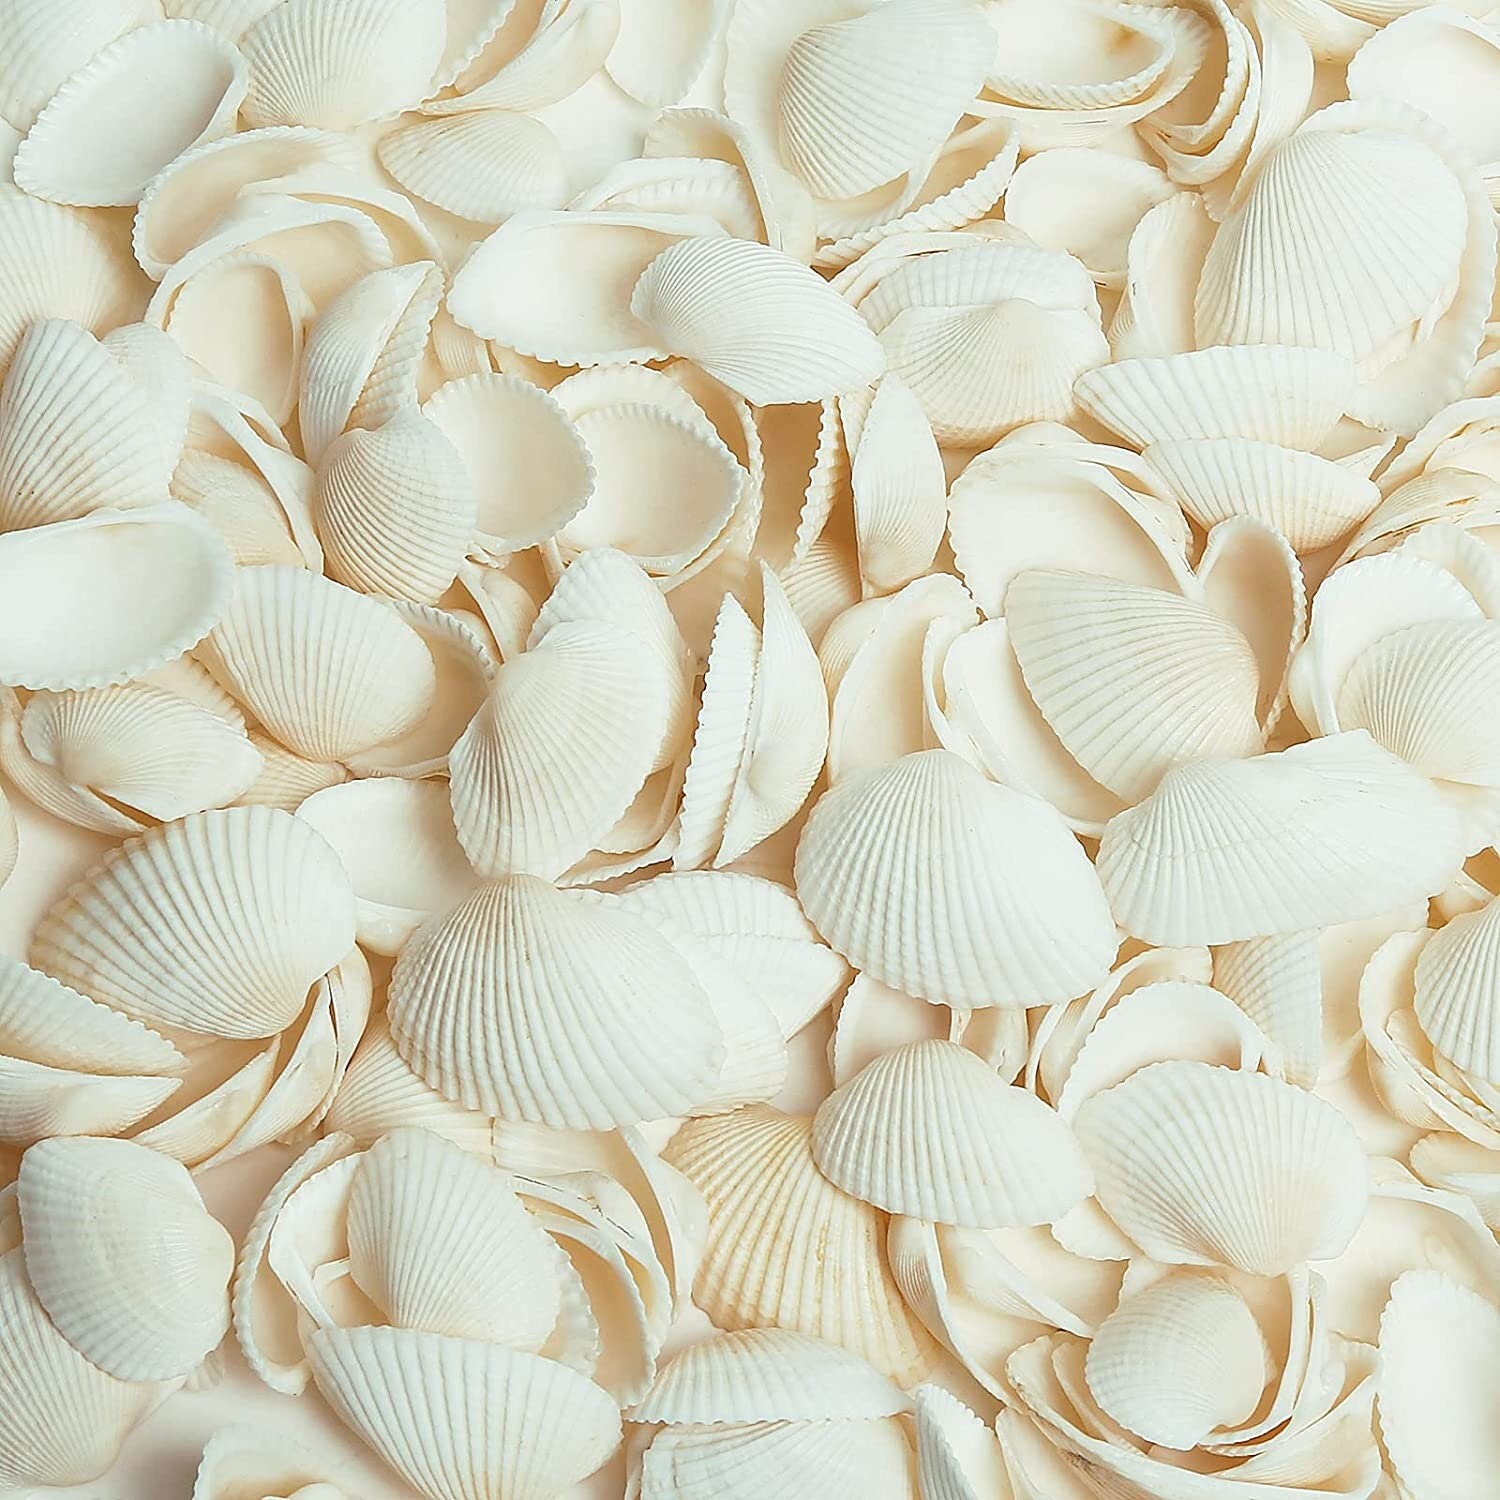 Bulk Natural White Small Seashell Clam Super Shells Assortment for DIY Craft Beach Decor